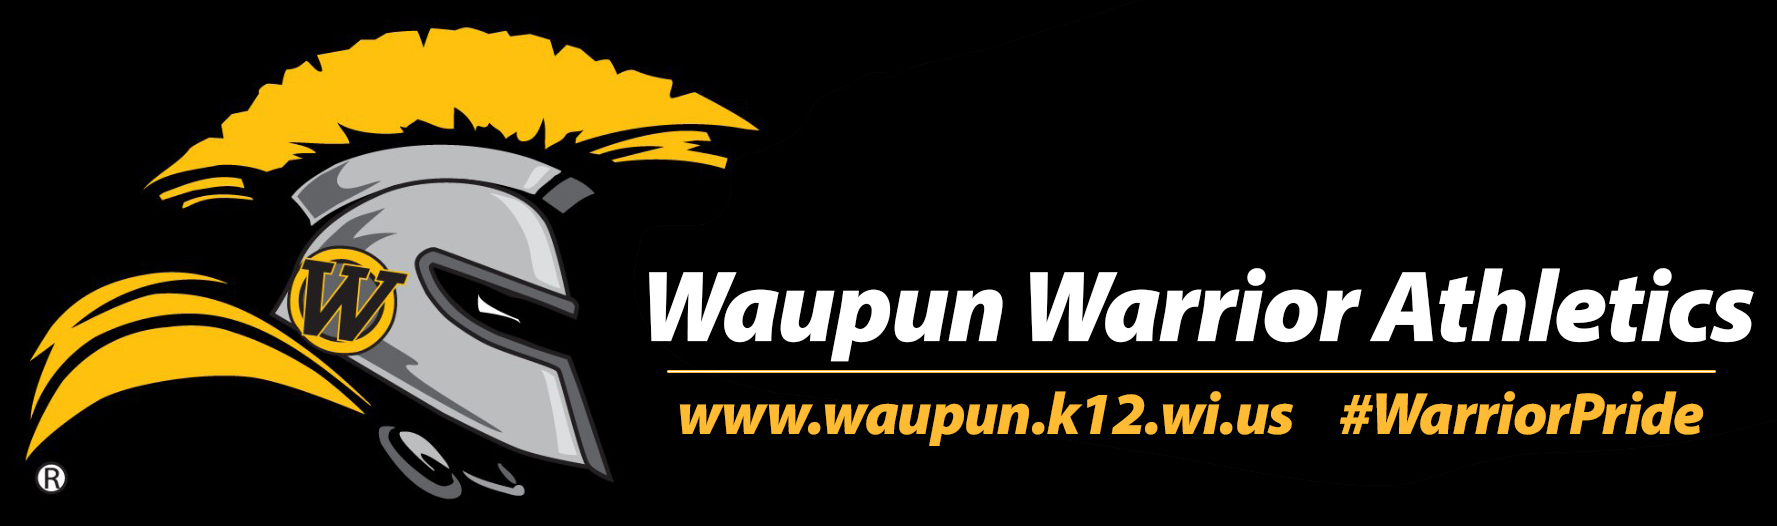 Waupun Warrior Athletics